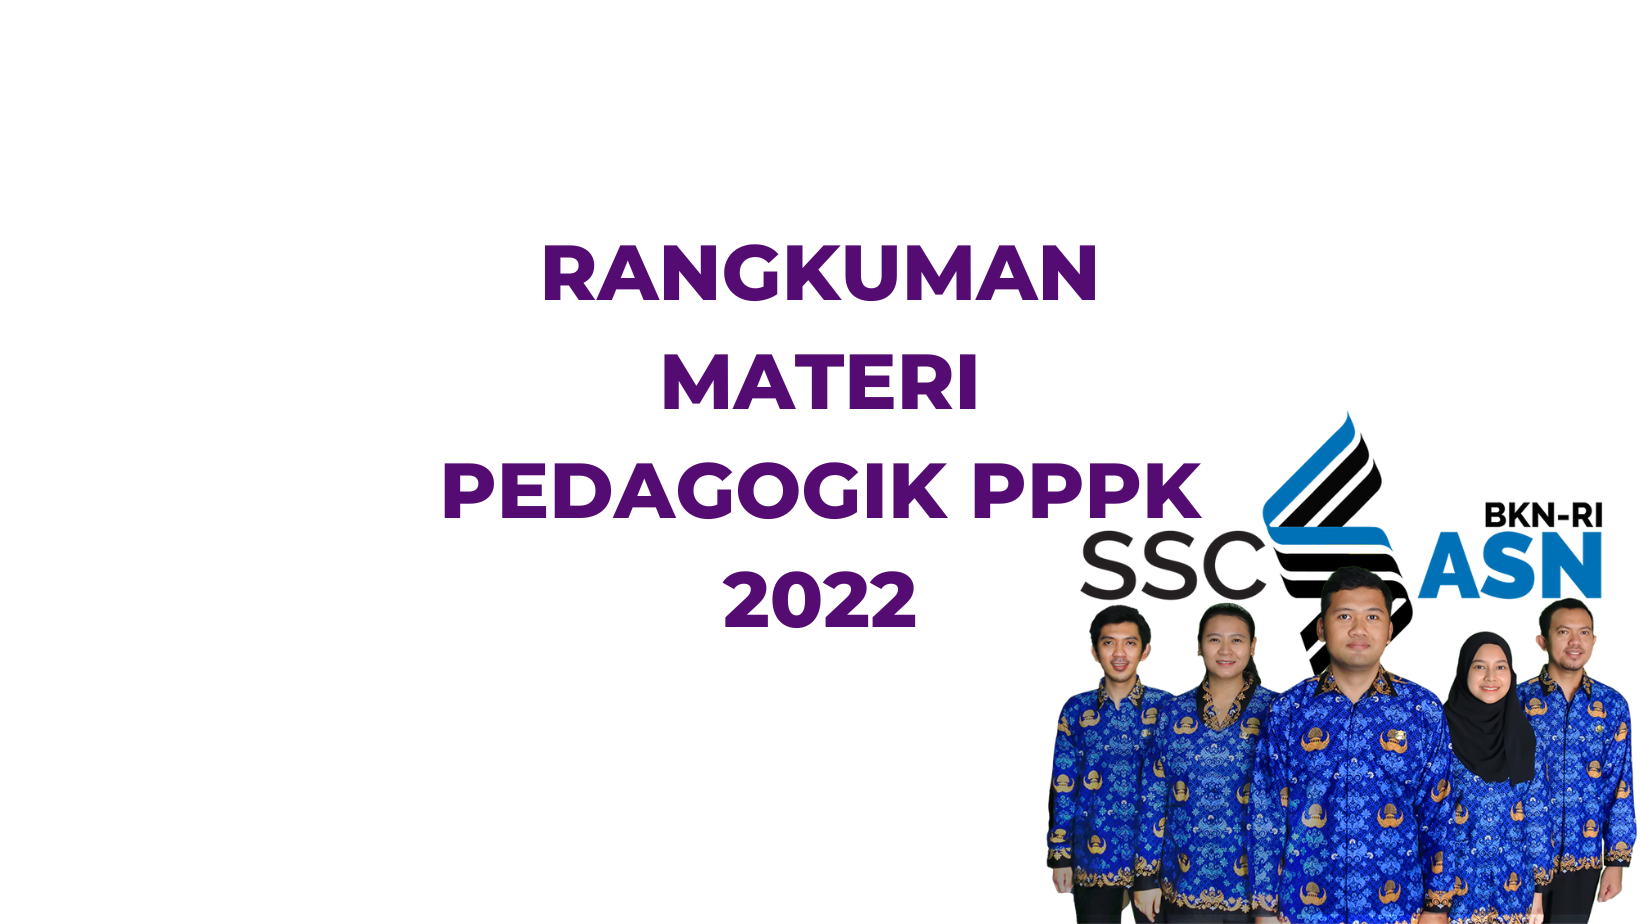 Rangkuman materi pedagogik PPPK 2022